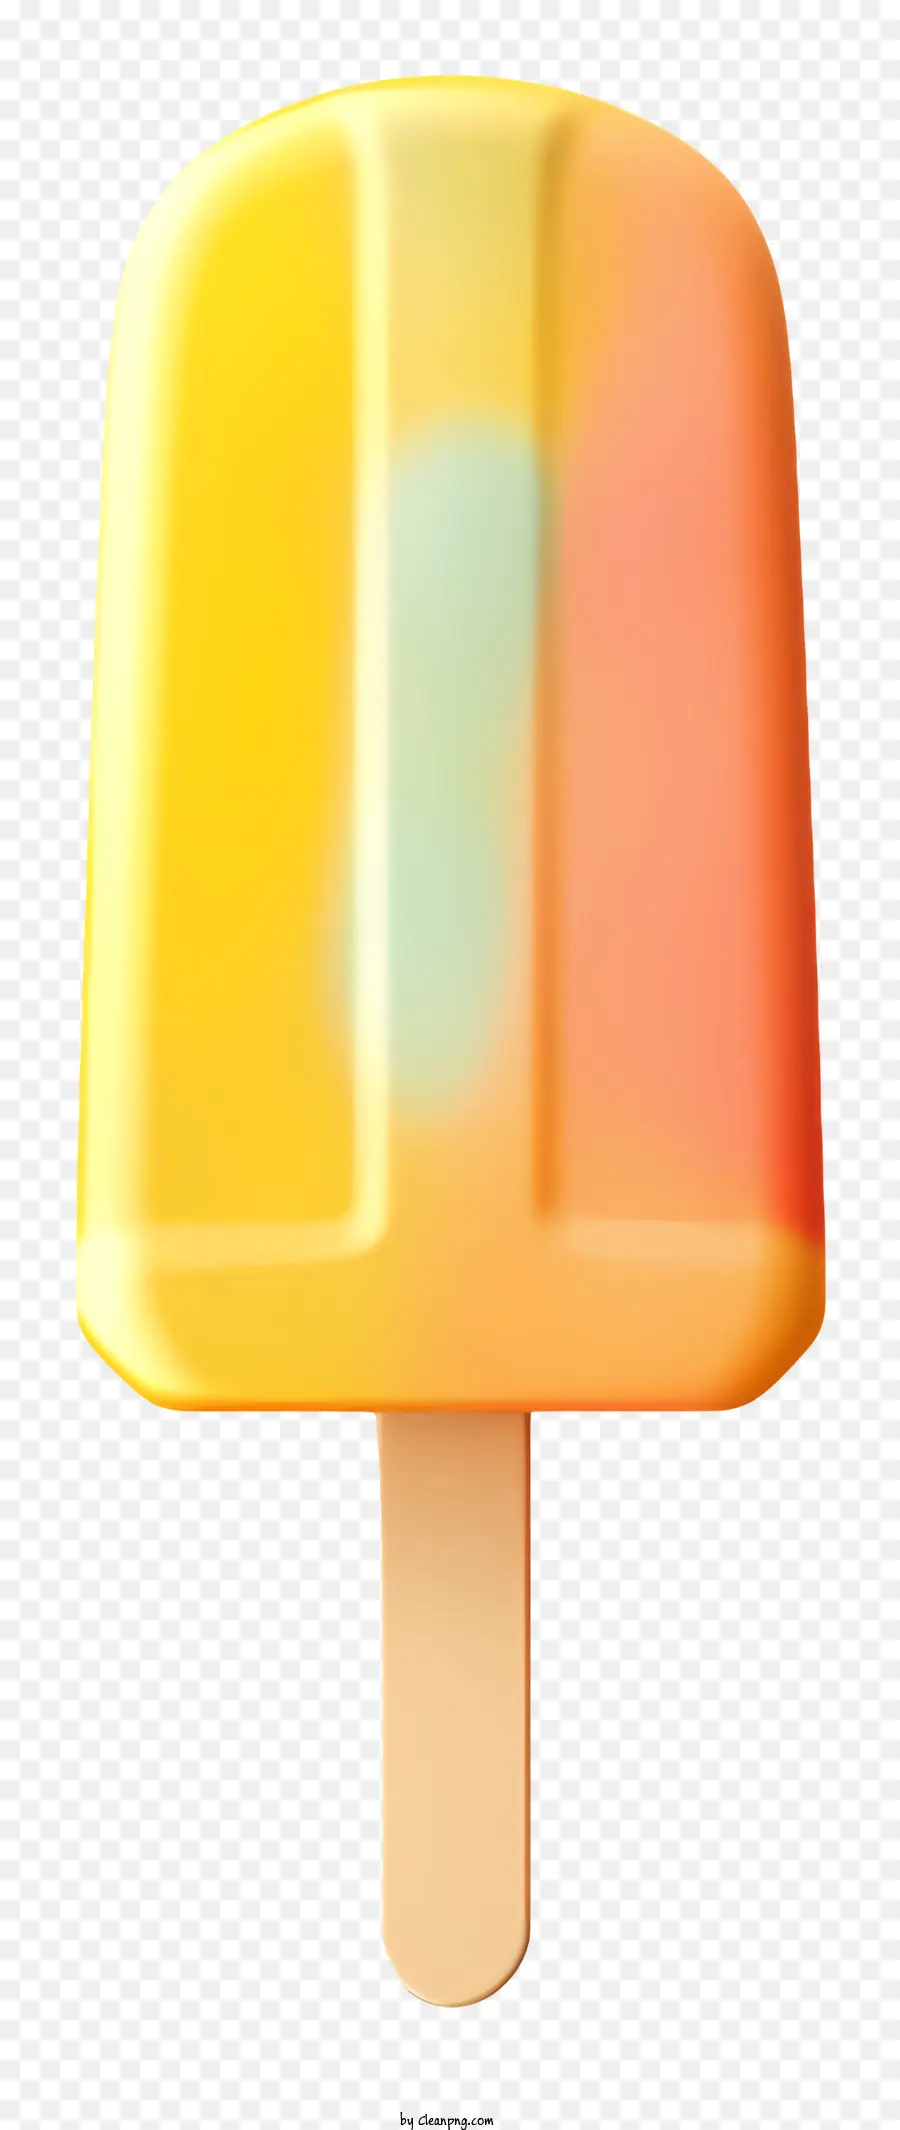 ice cream pop yellow and red bubblegum flavor wooden stick wooden handles